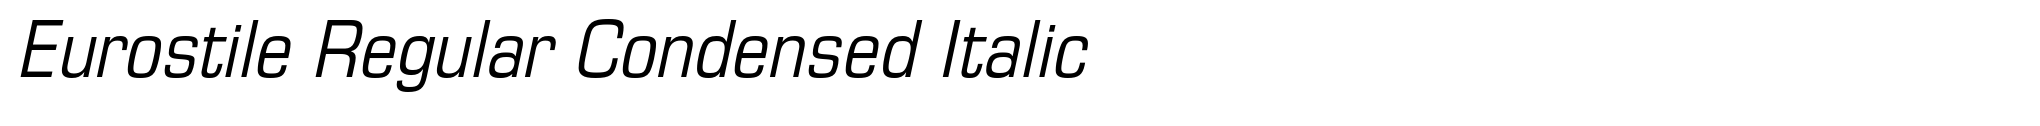 Eurostile Regular Condensed Italic image